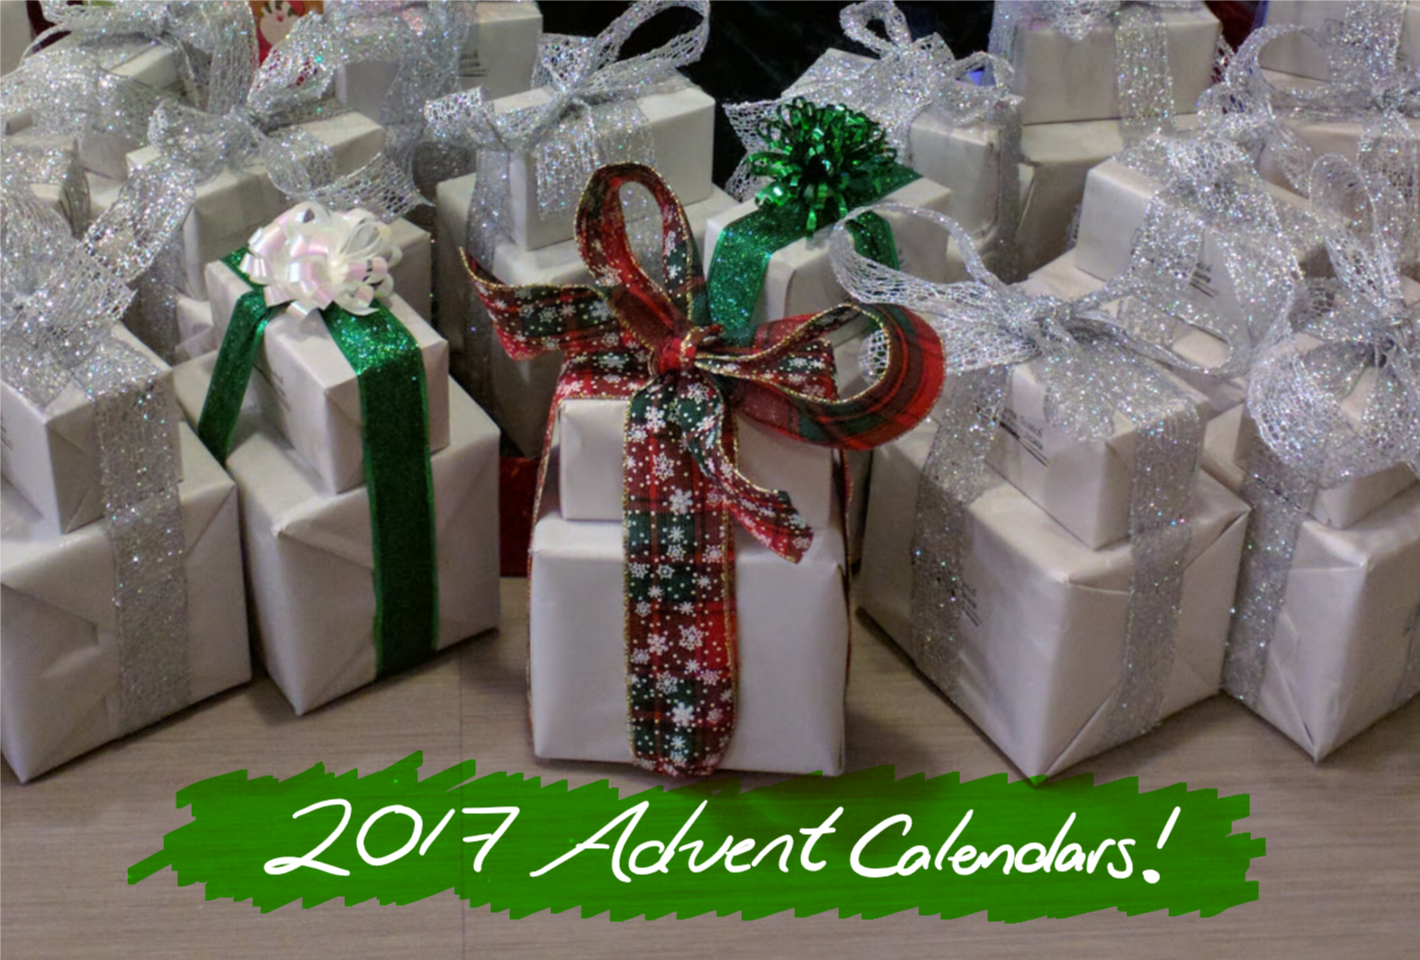 2017 Advent Calendars on Sale